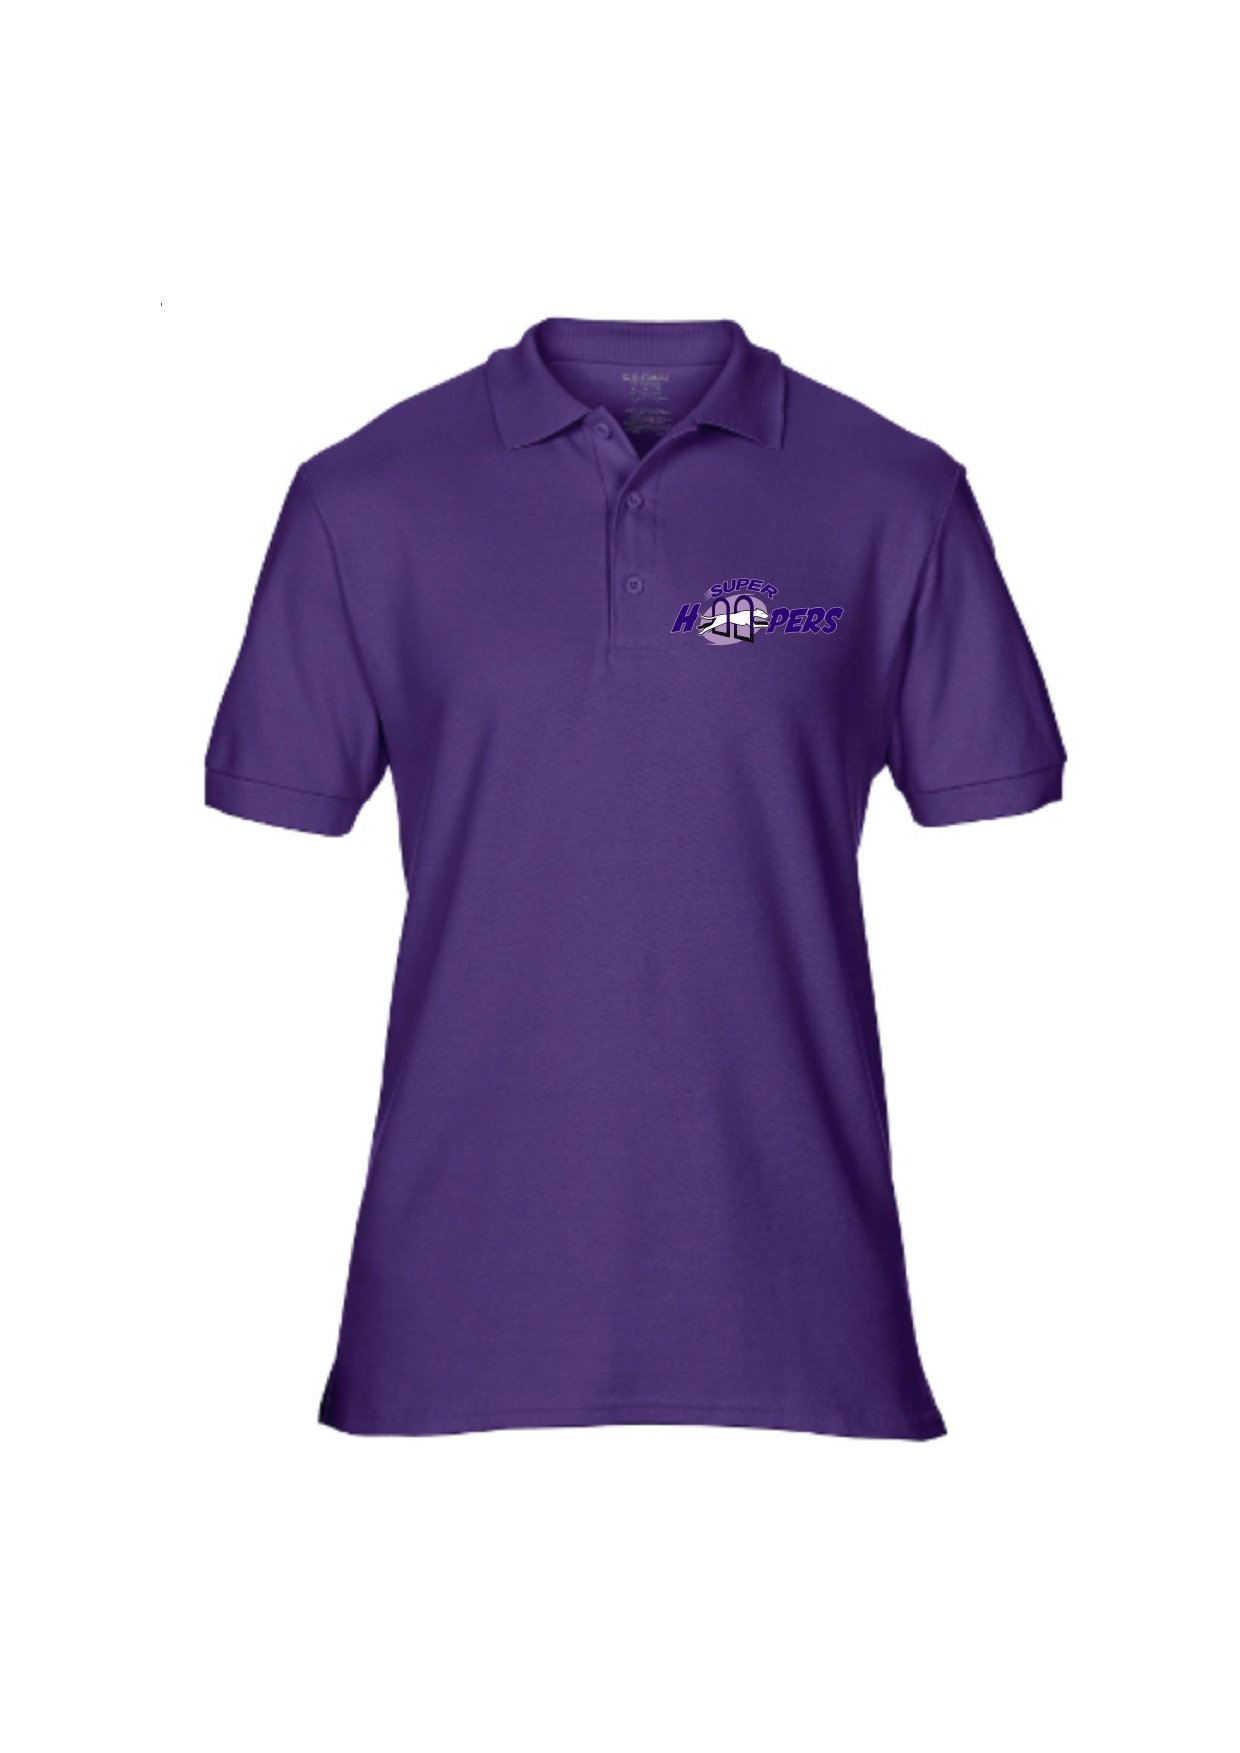 Super Hoopers Polo shirt 2XL – Purple – Pooch